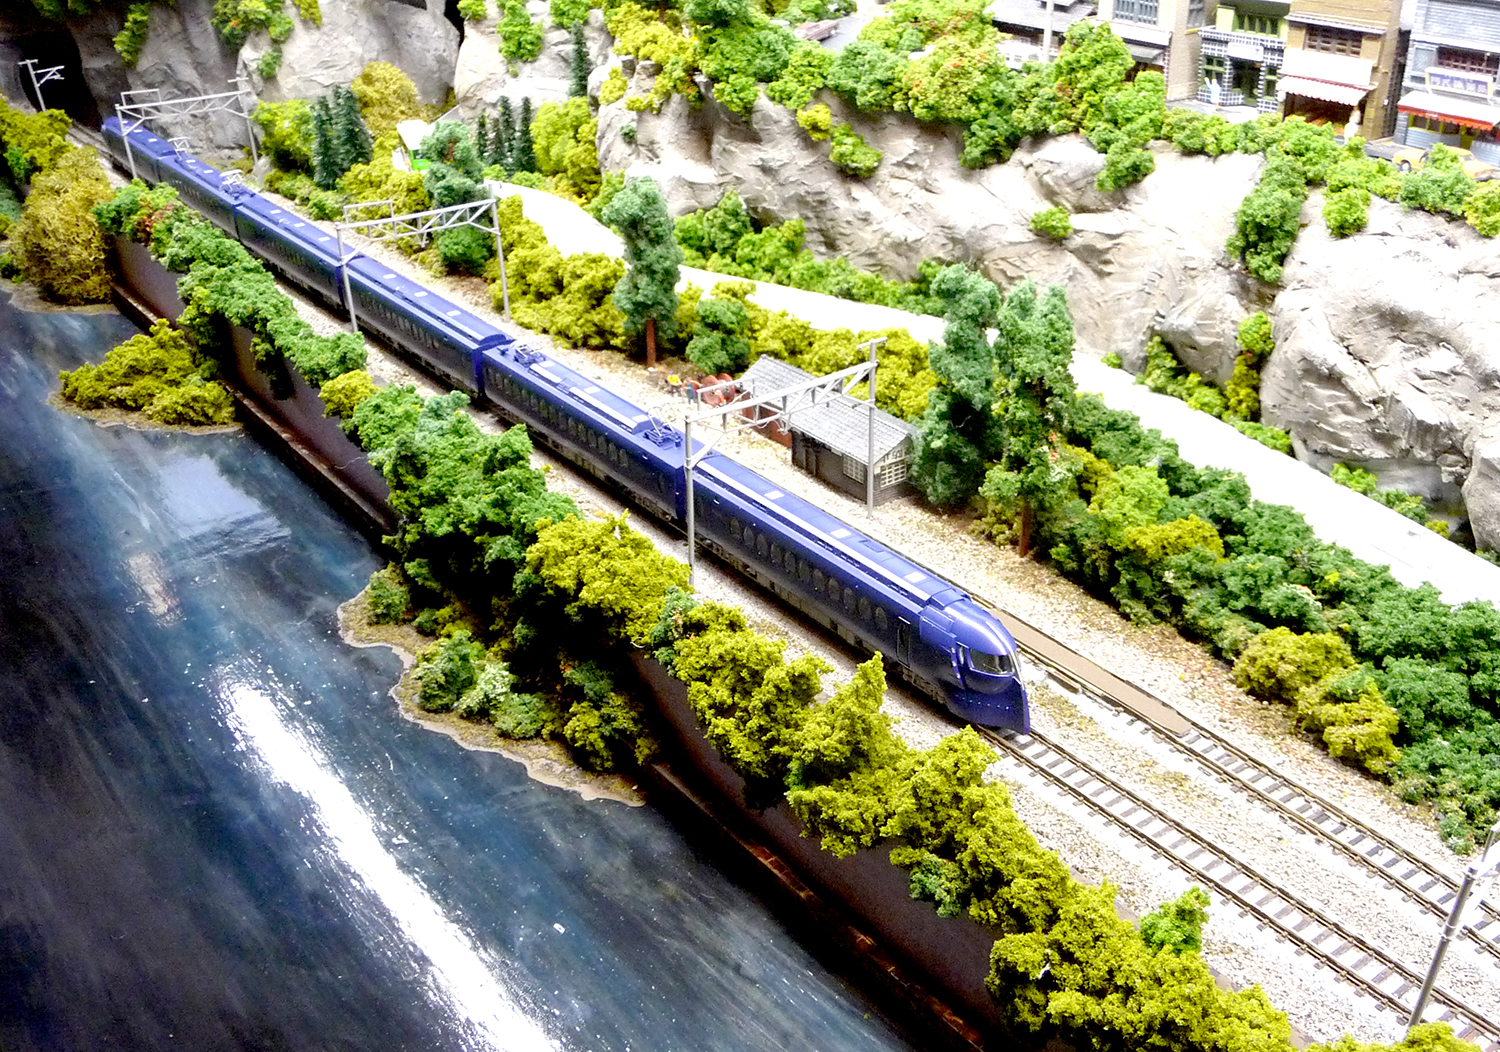 Popular Model Railway Exhibition Returns